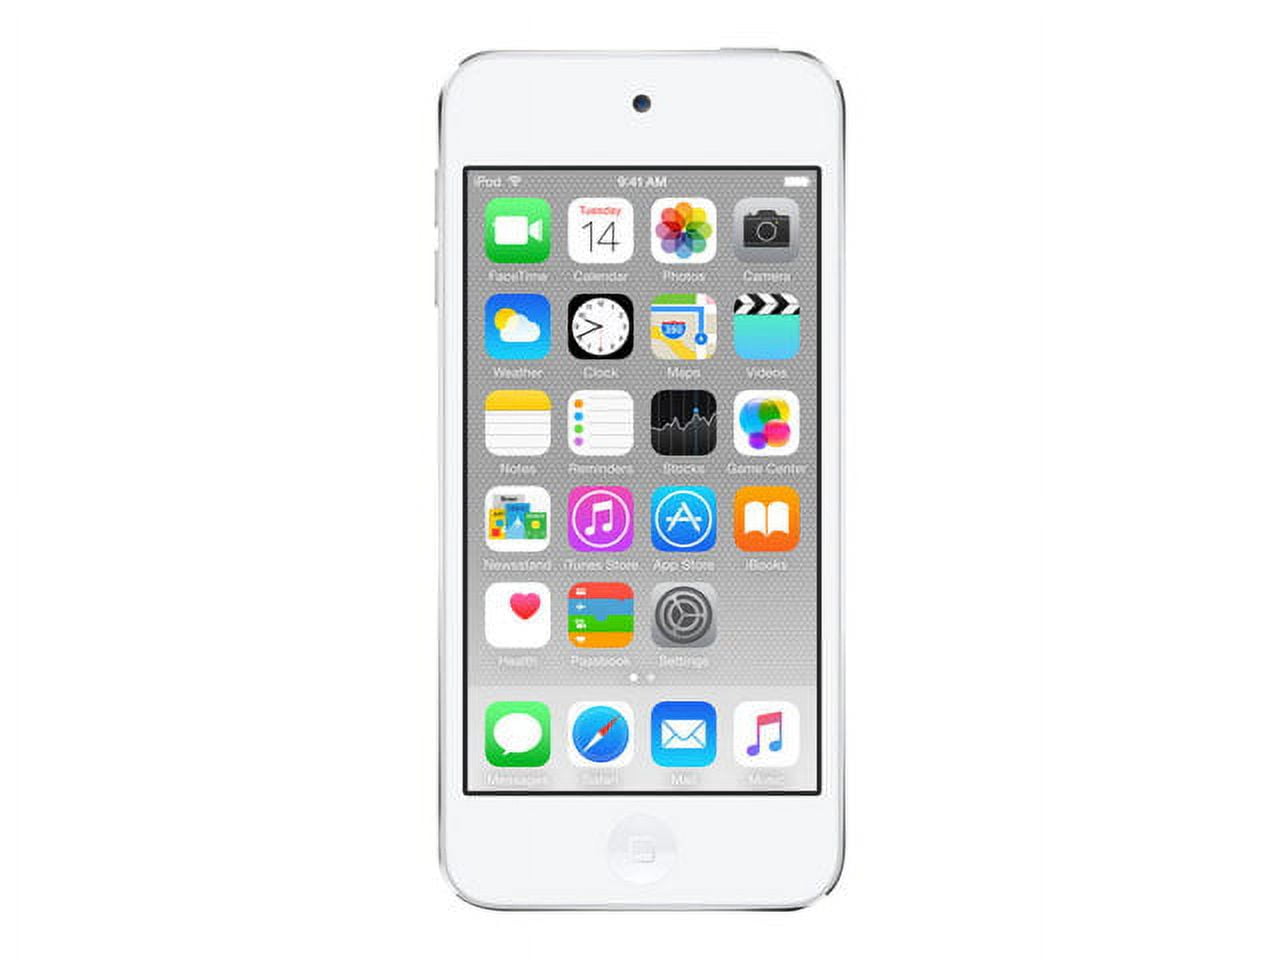 Apple iPod touch 32GB - Silver (Previous Model) - Walmart.com